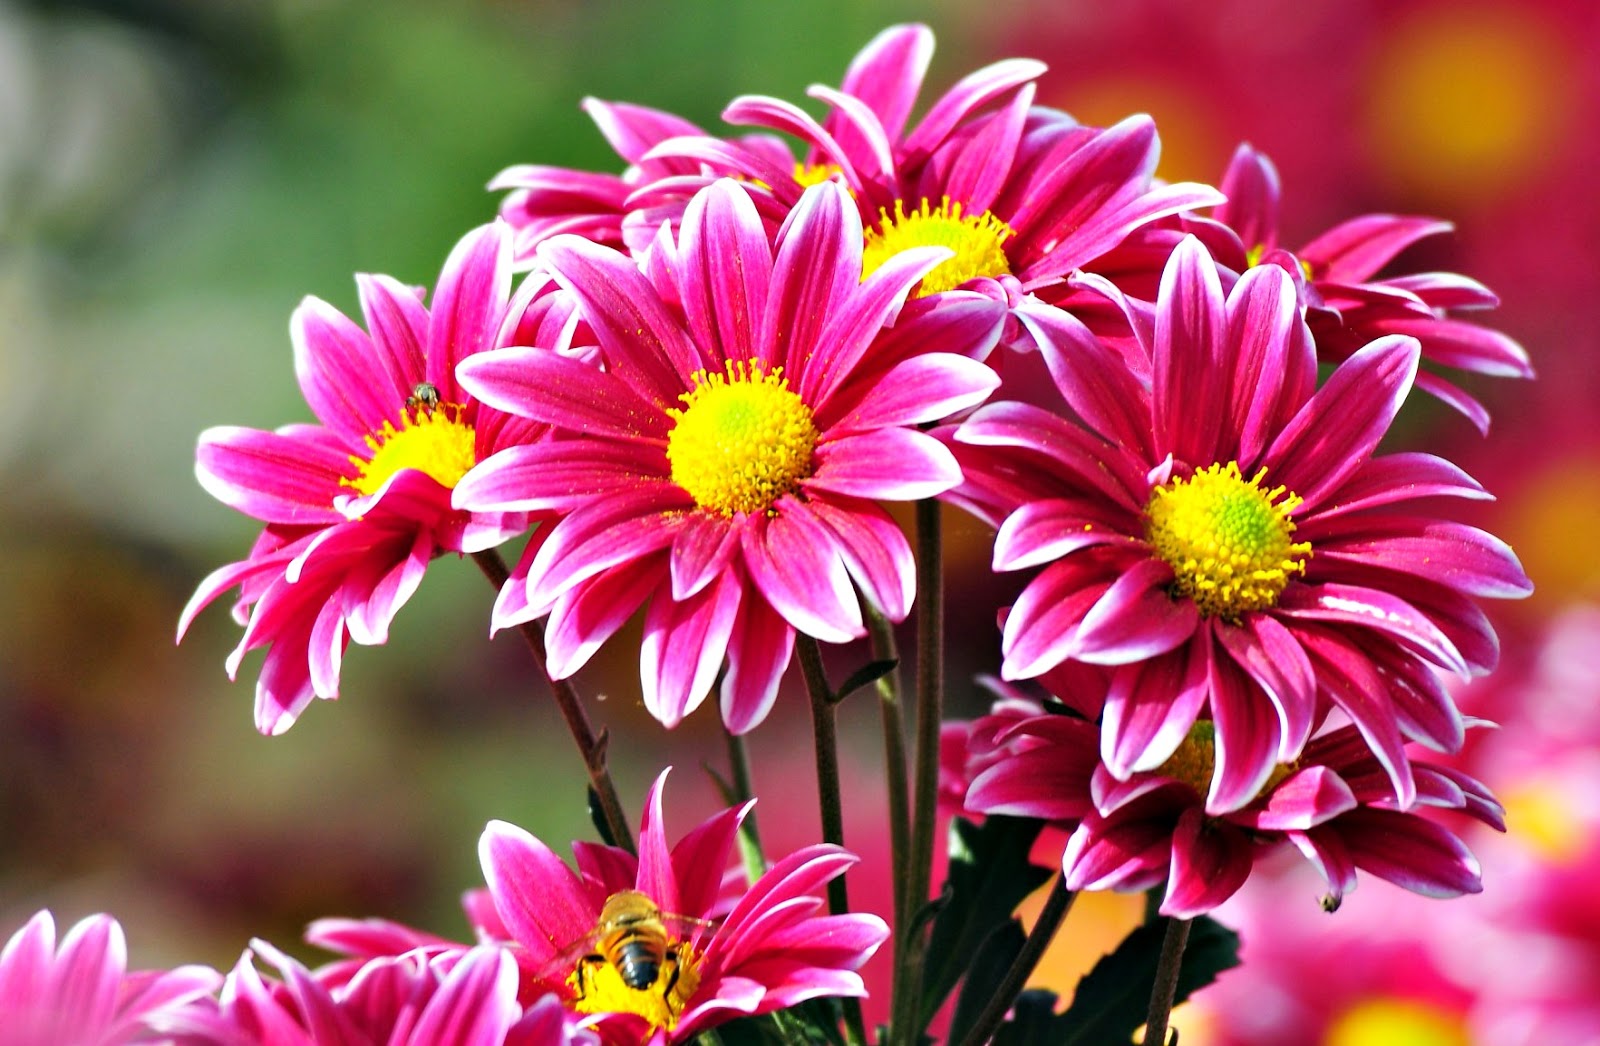 Gambar Bunga Yang Paling Cantik Toko Fd Flashdisk Flashdrive